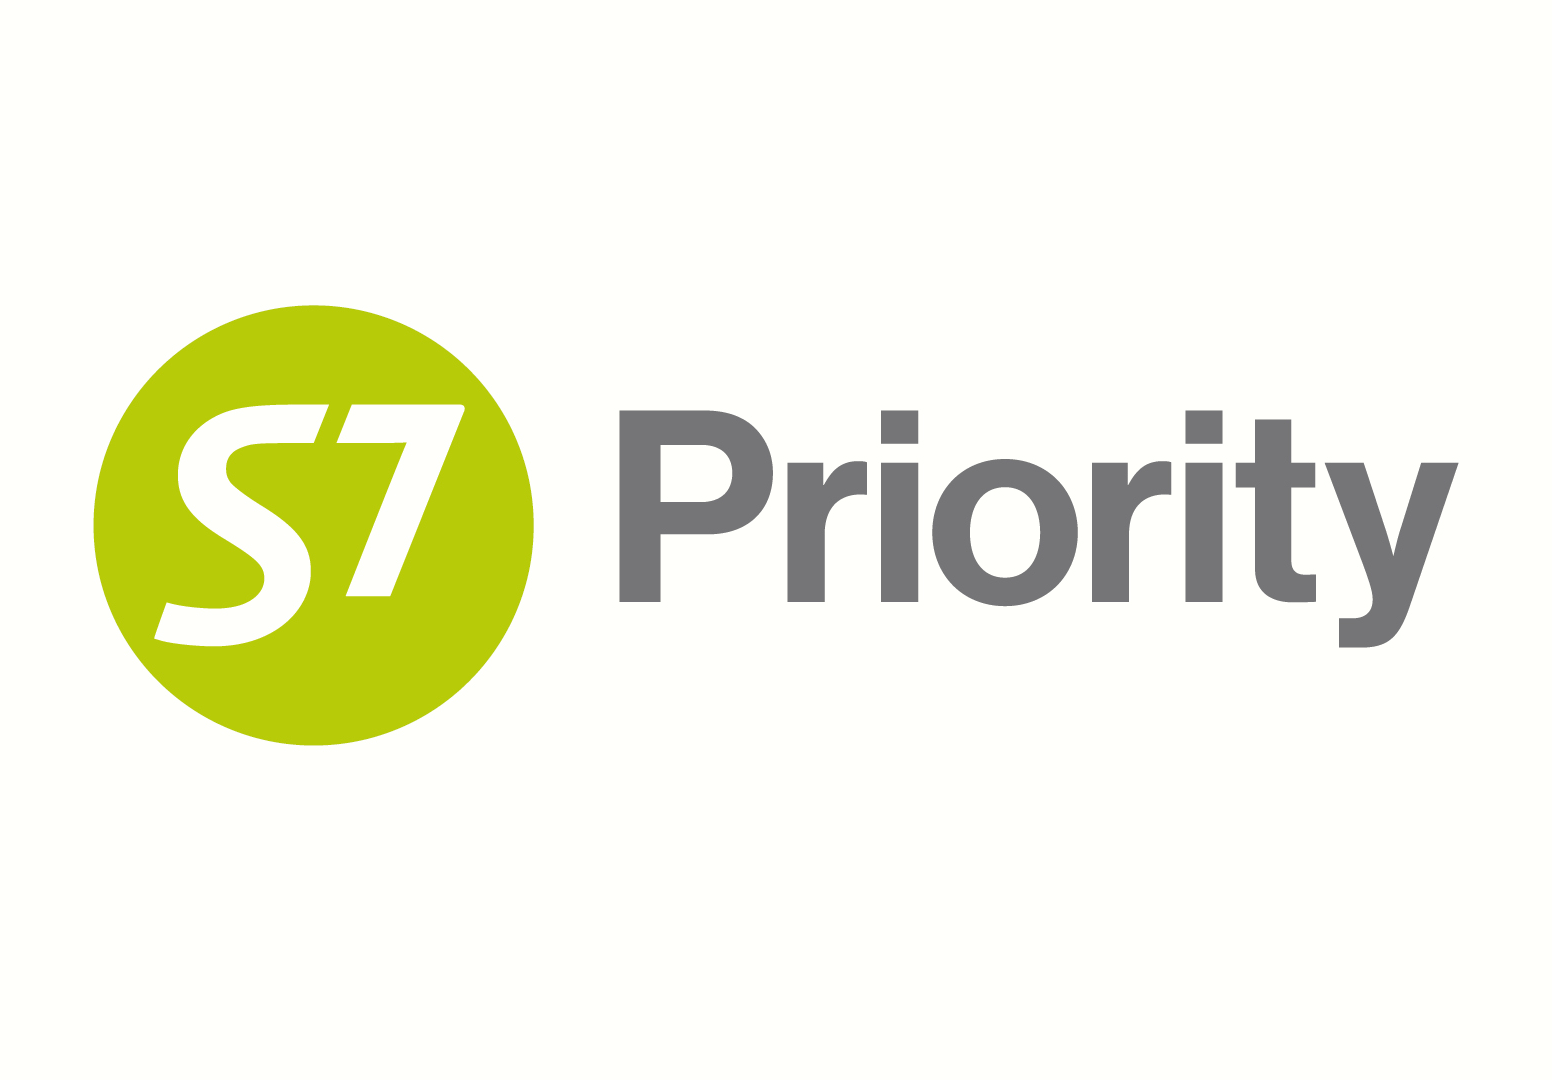 S7 Logo - 1.5 million S7 Priority members